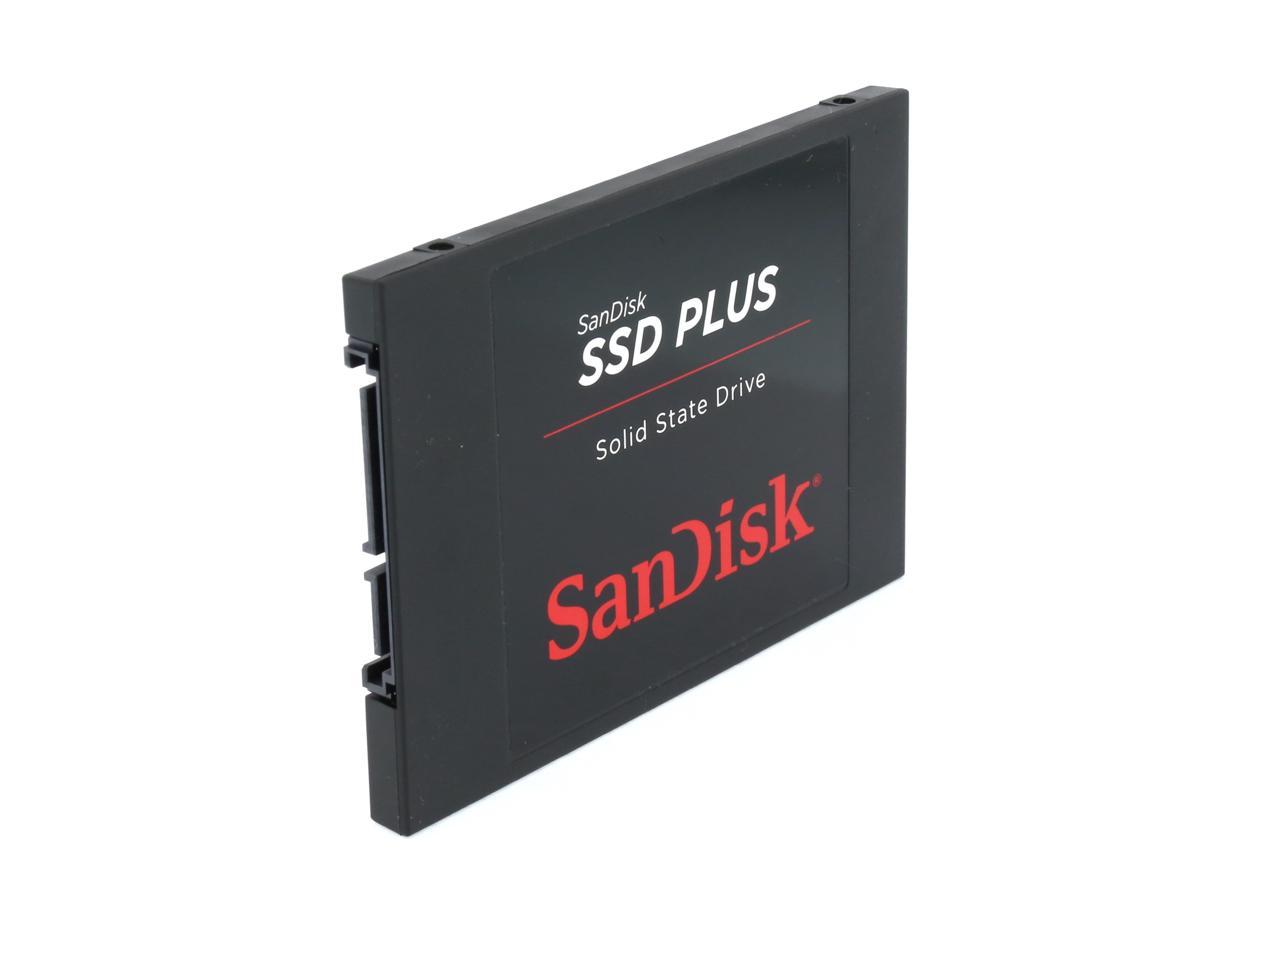 SanDisk SSD PLUS 2.5&quot; 120GB SATA III Internal Solid State Drive (SSD)  SDSSDA-120G-G25 - Newegg.com